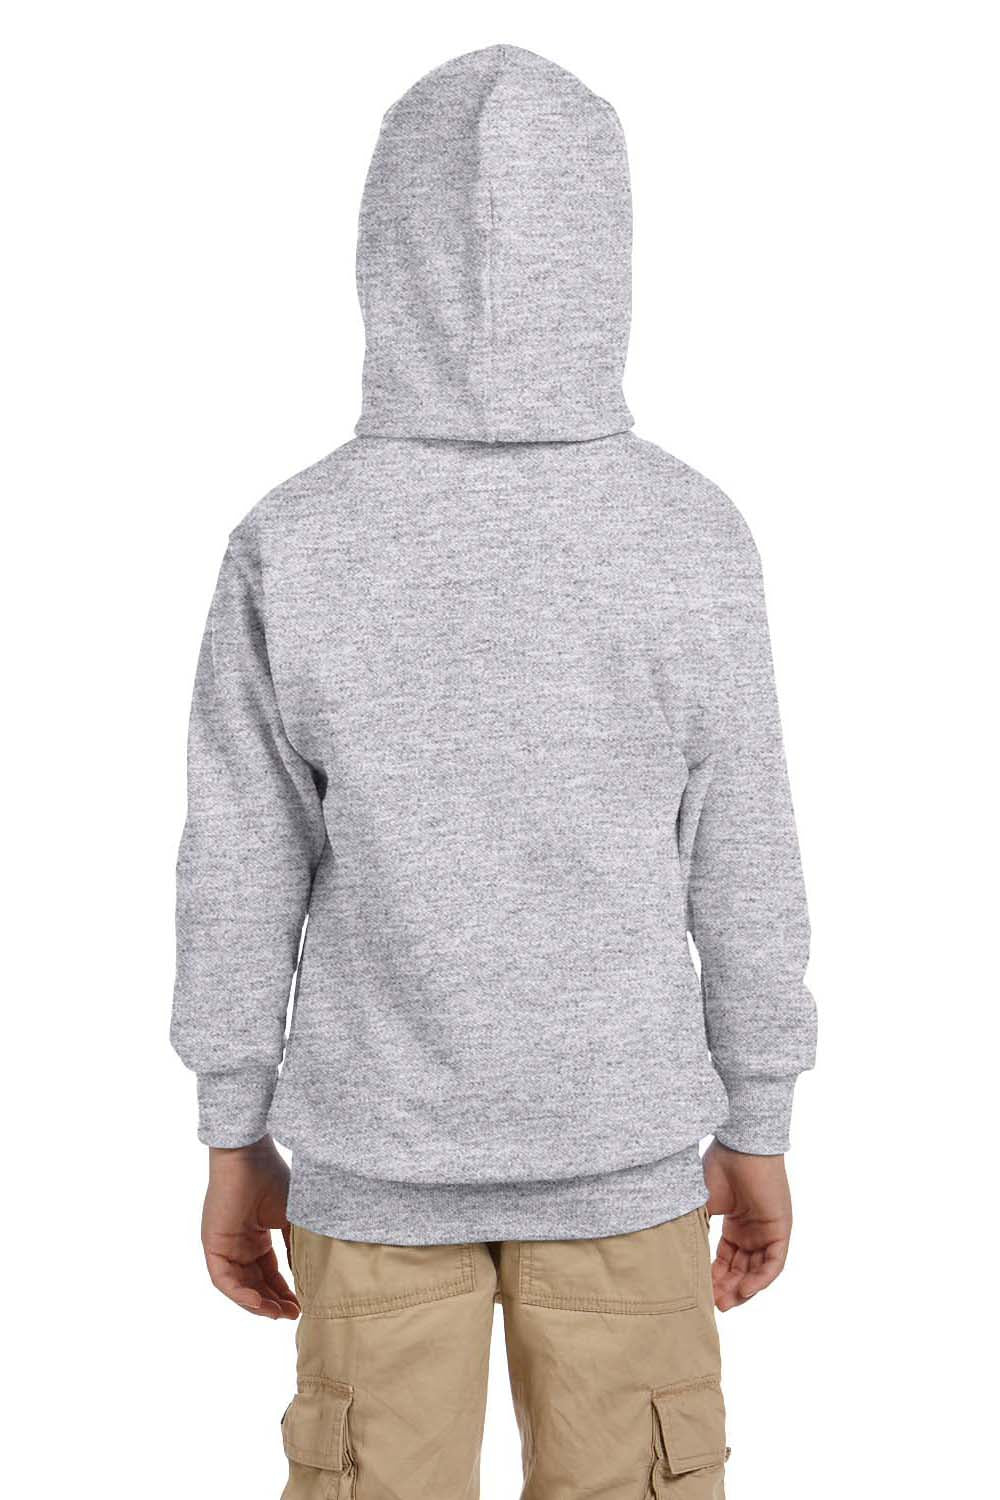 Hanes P473 Youth EcoSmart Print Pro XP Hooded Sweatshirt Hoodie Ash Grey Back